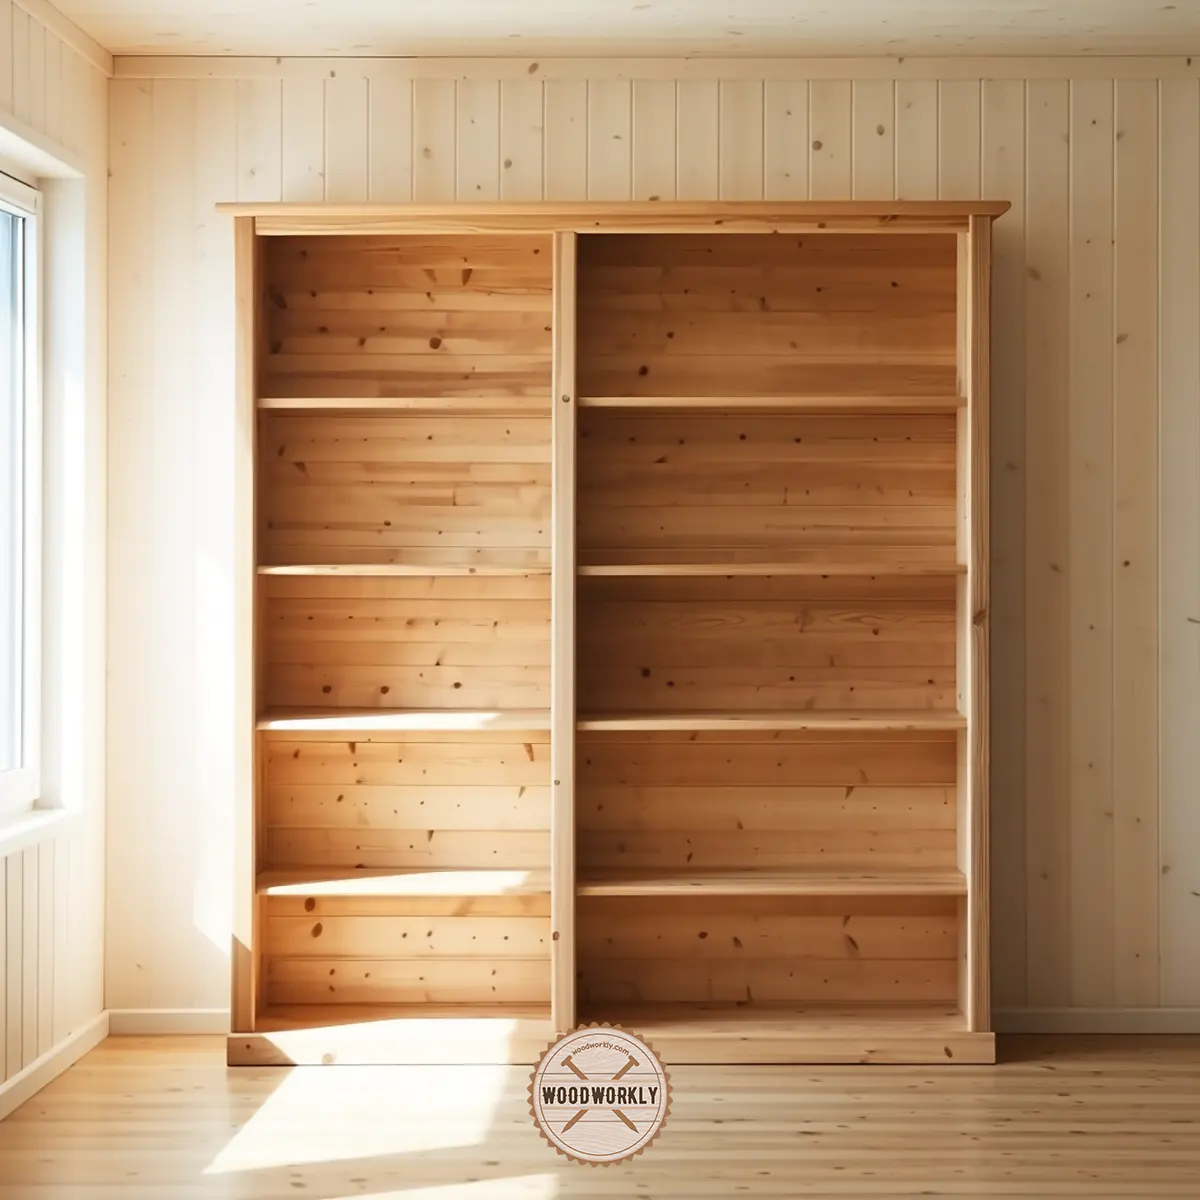 Spruce wood book shelf